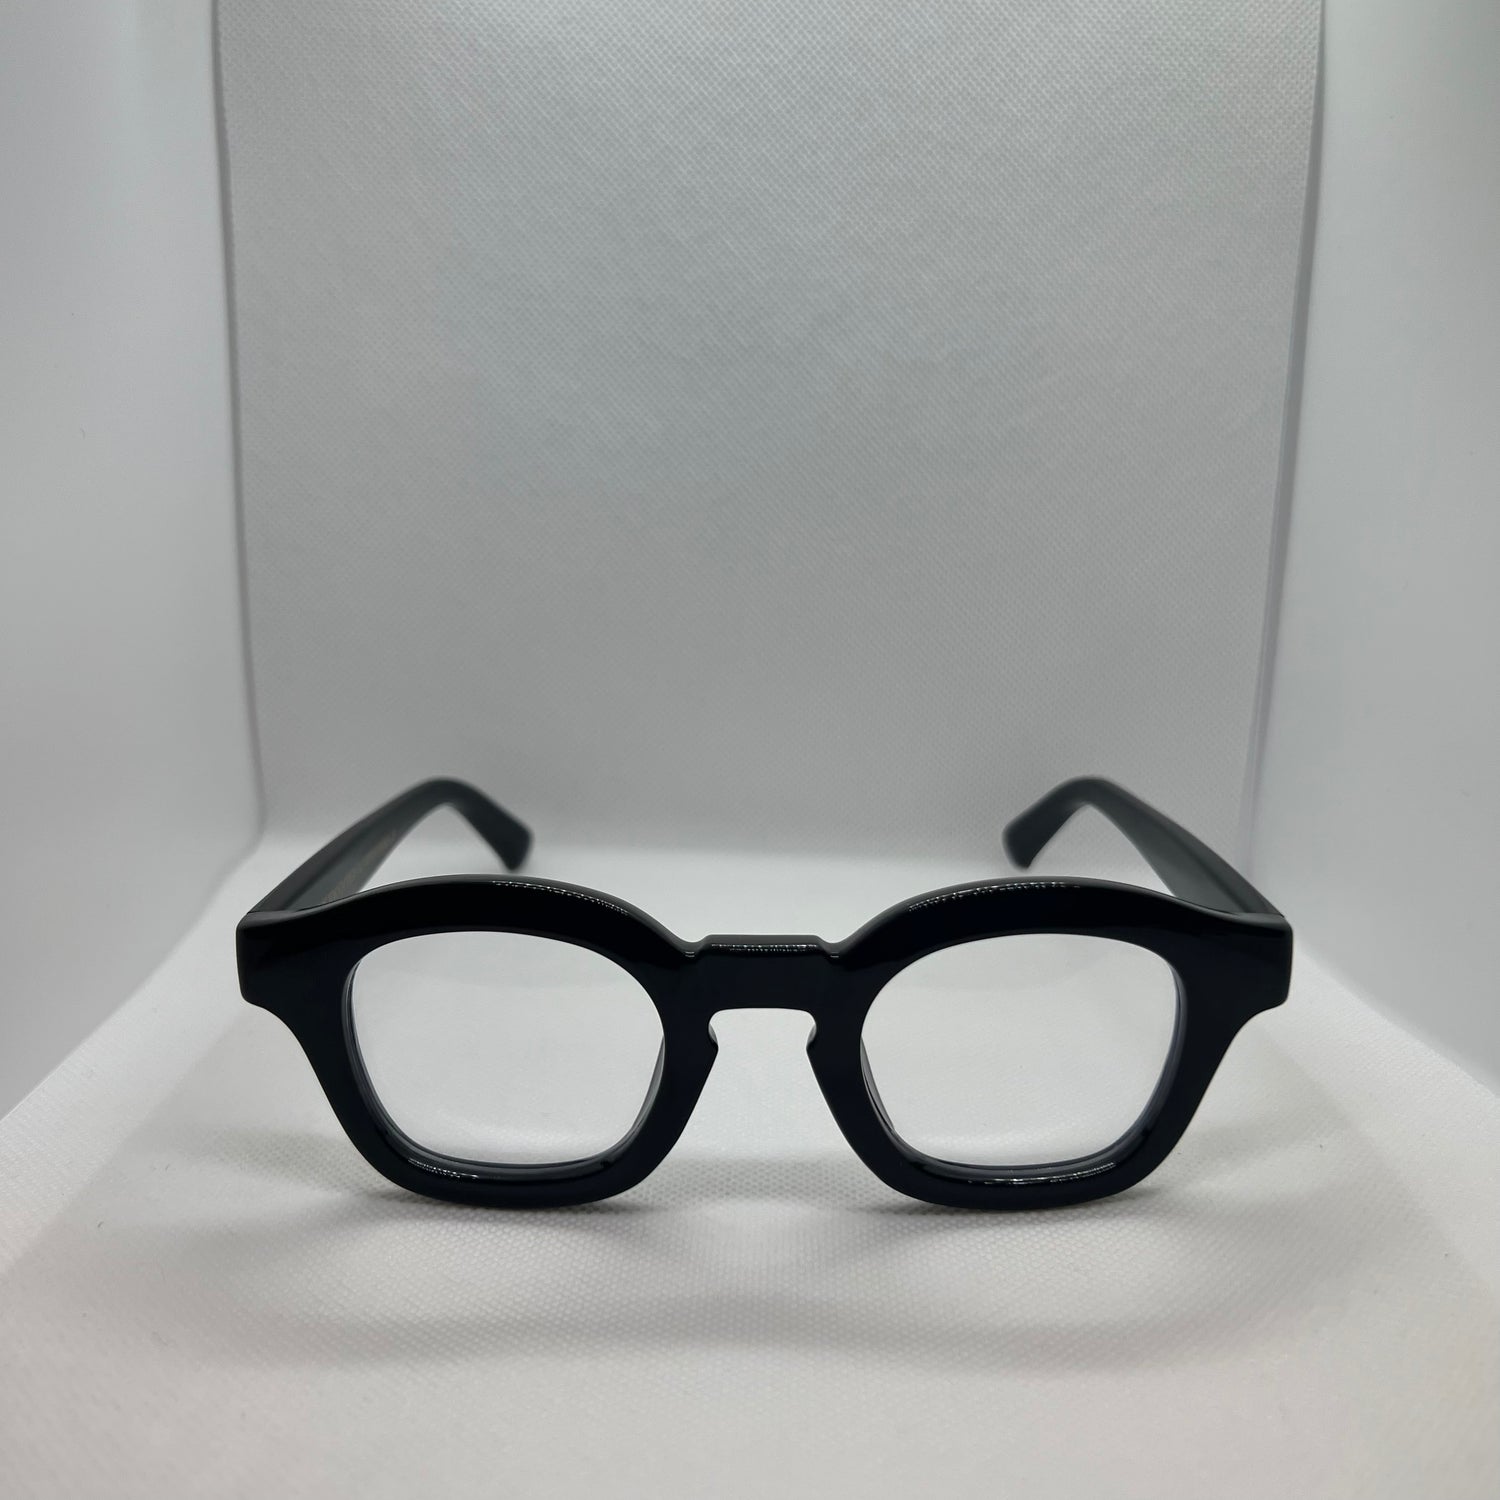 DENIS Sunglasses, anti-fog lens, BLACK FLAME